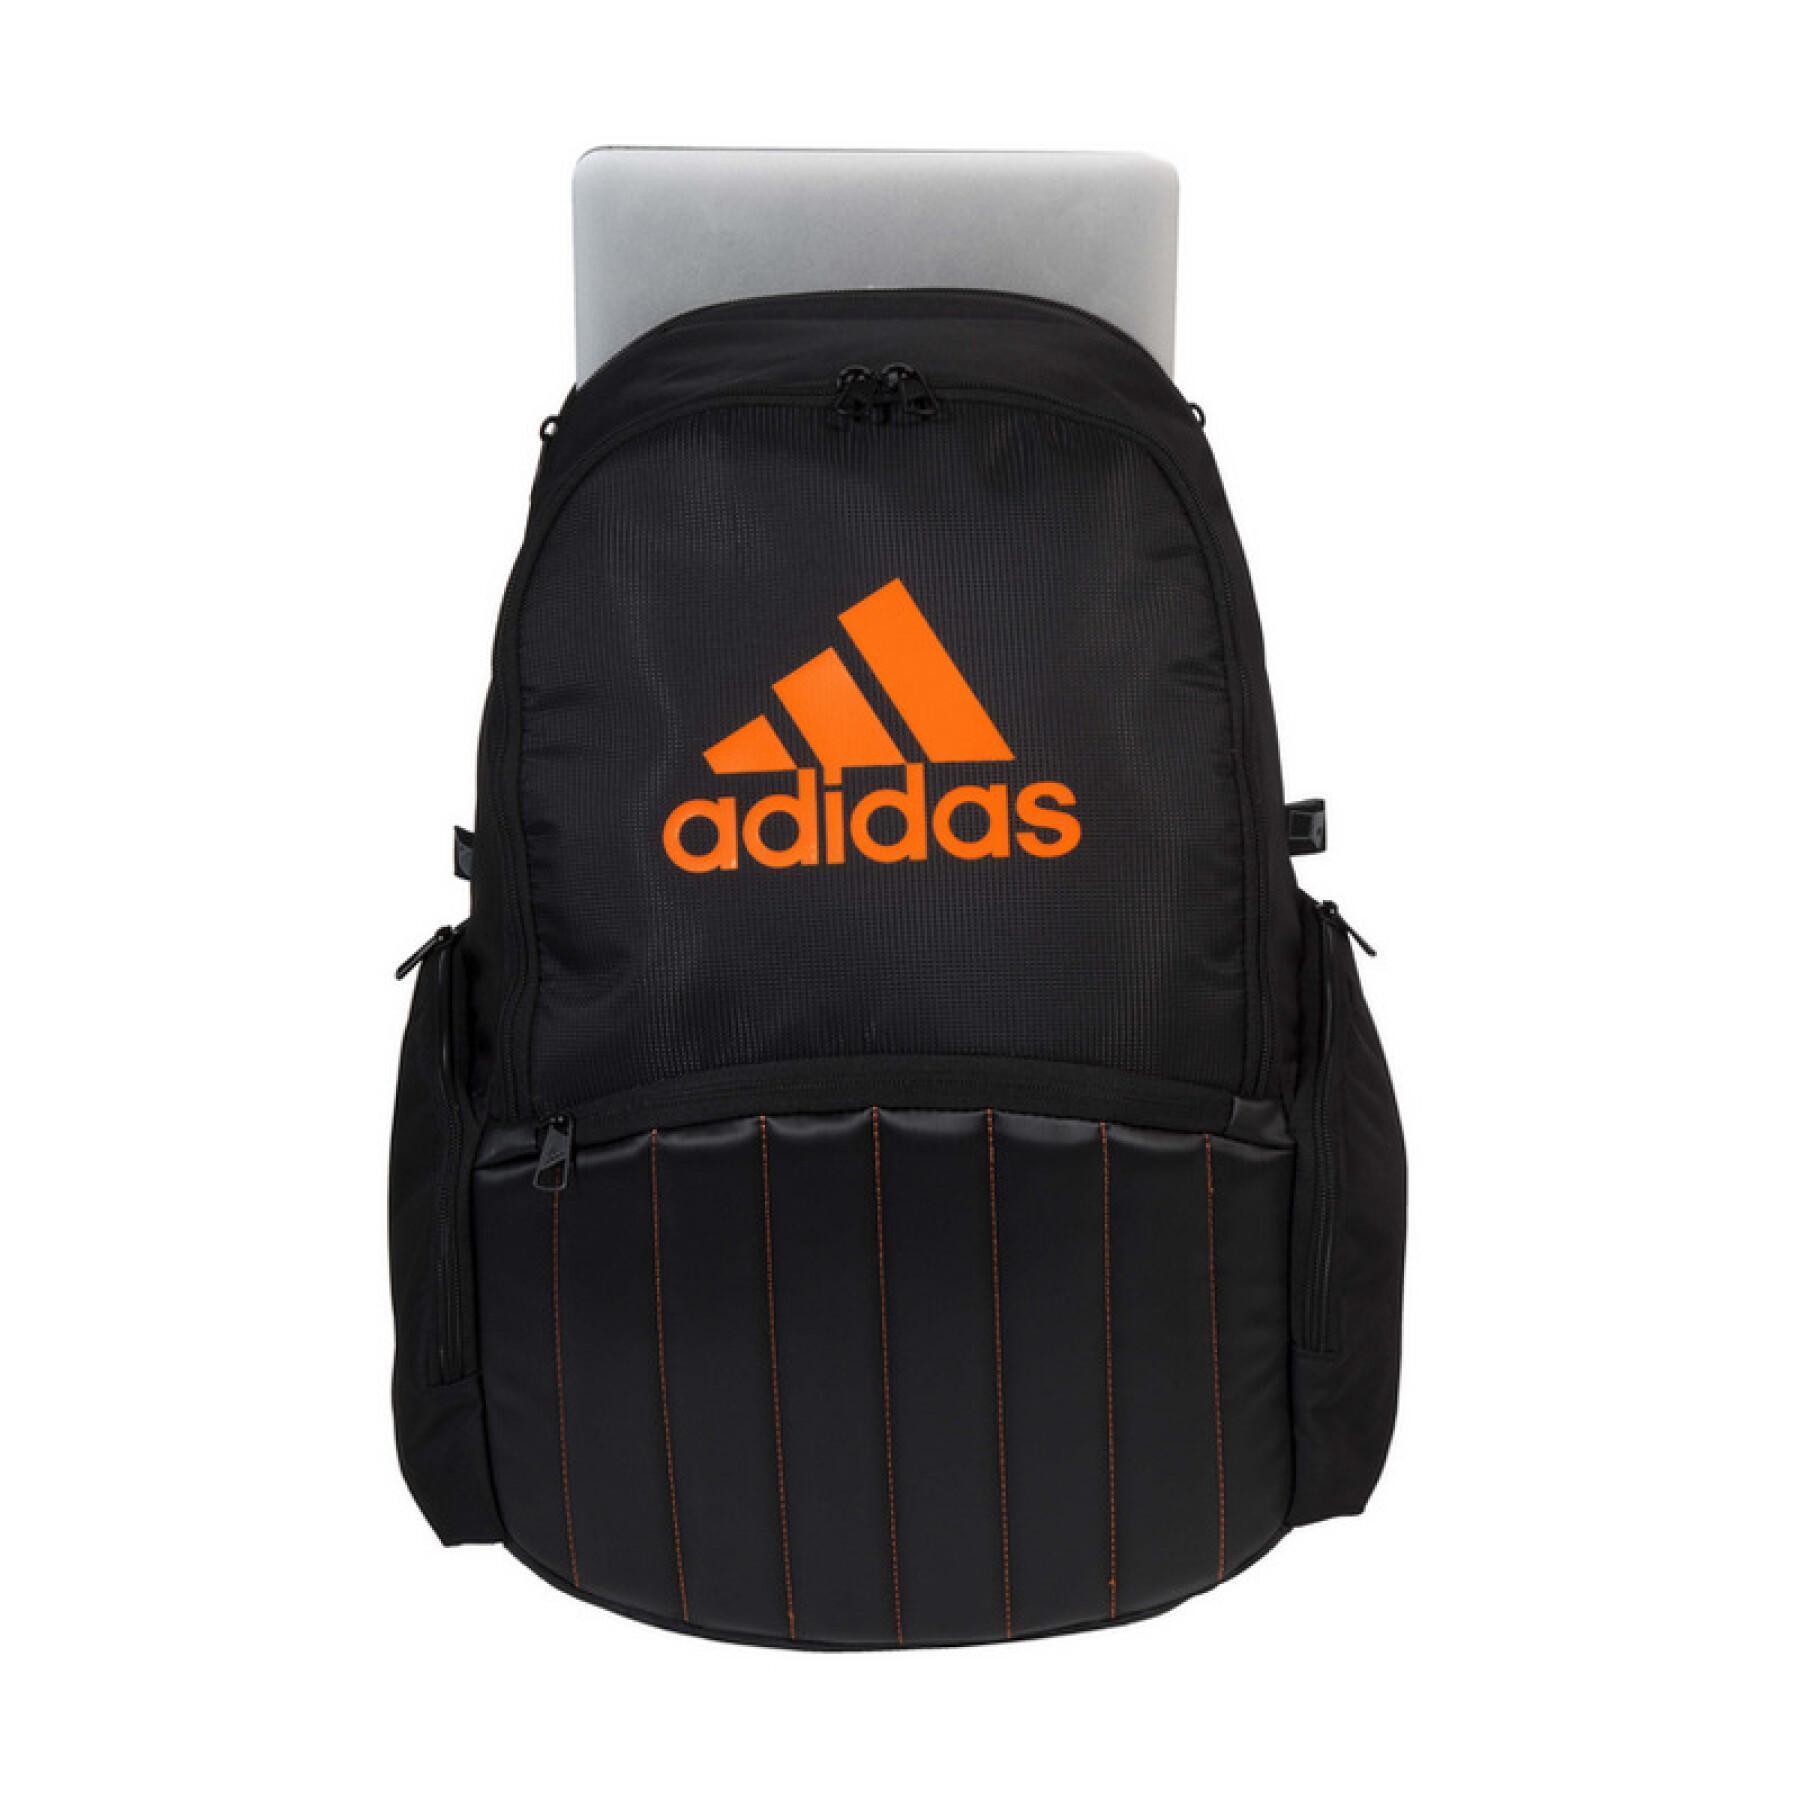 Backpack adidas 3